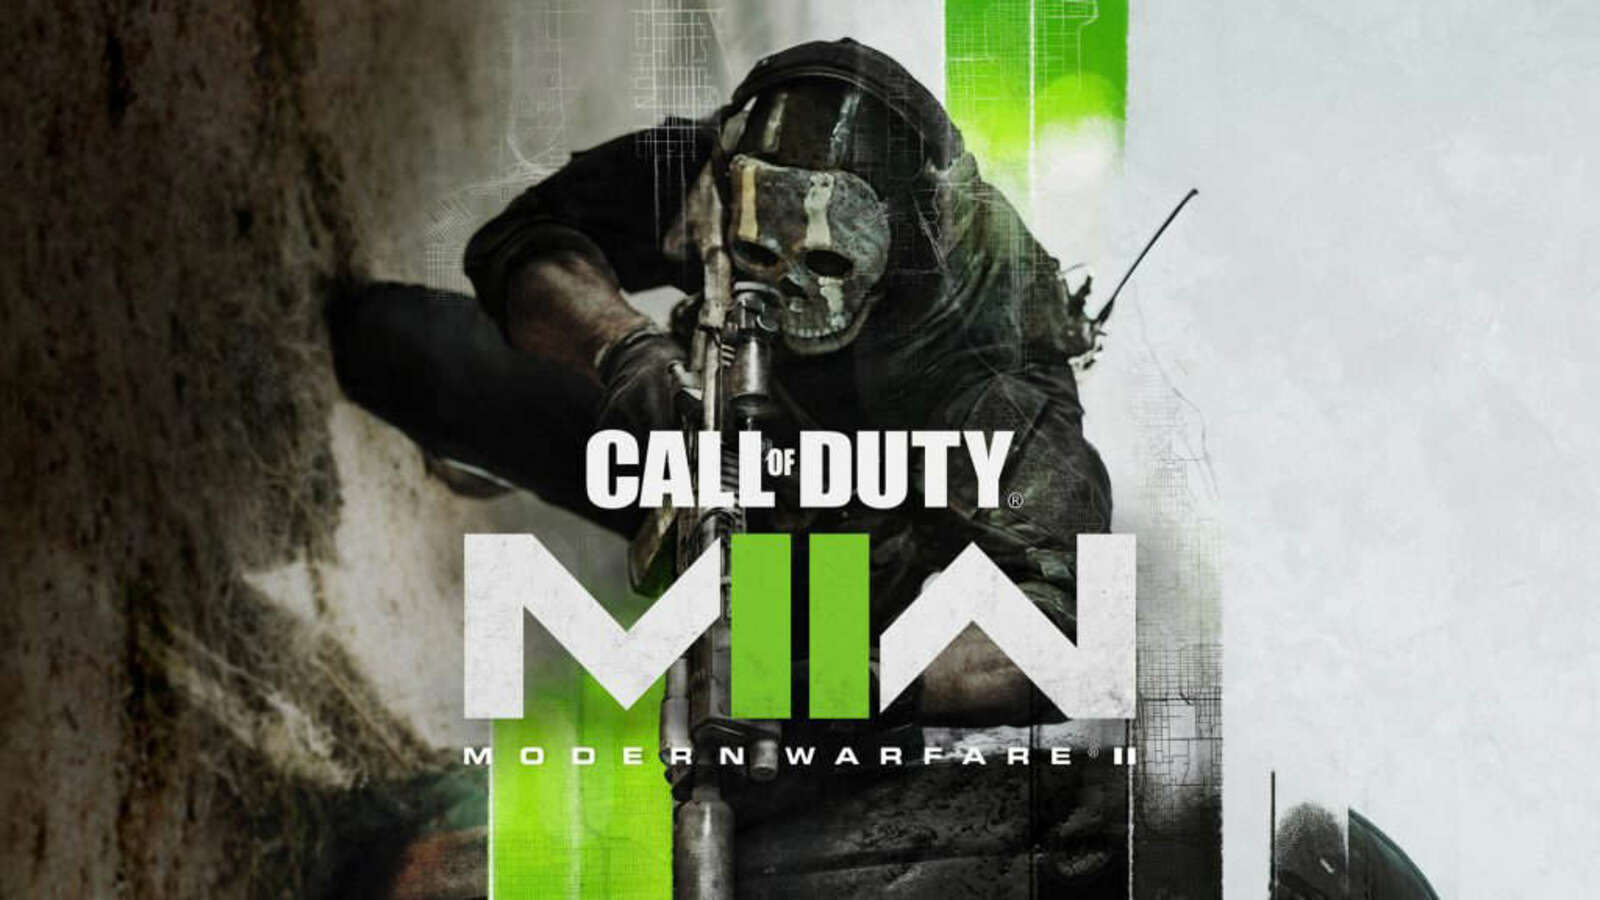 Call of Duty: Modern Warfare - leak following NFL event, DMZ all but confirmed